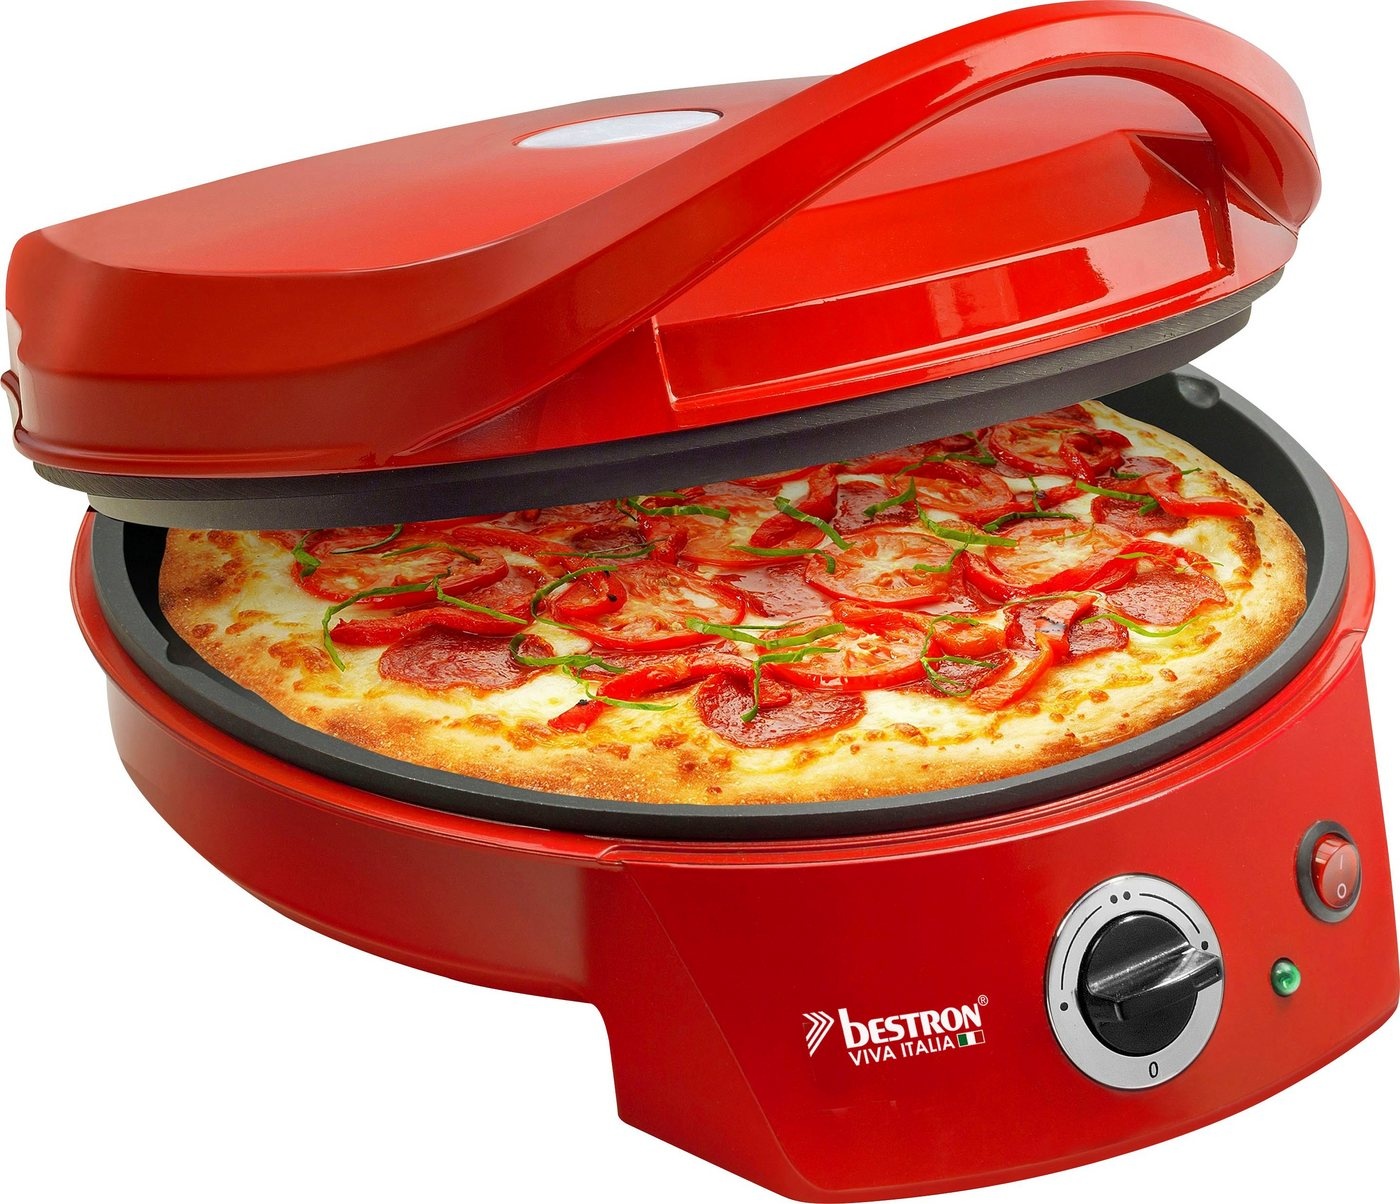 bestron Pizzaofen APZ400 Viva Italia, Ober-/Unterhitze, Bis max. 180°C, 1800 Watt, Rot rot